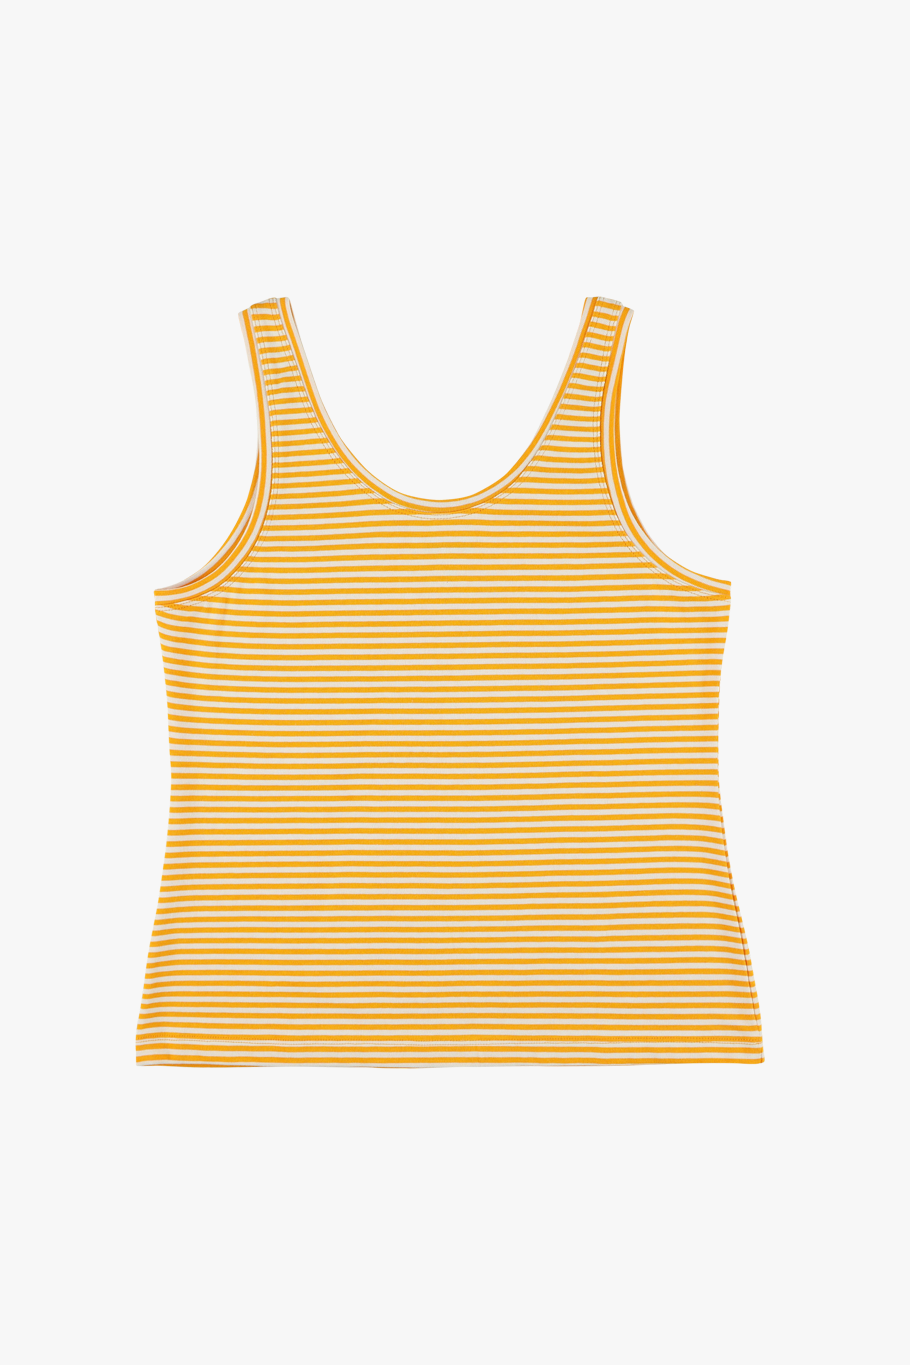 Splash Stripes - Yellow